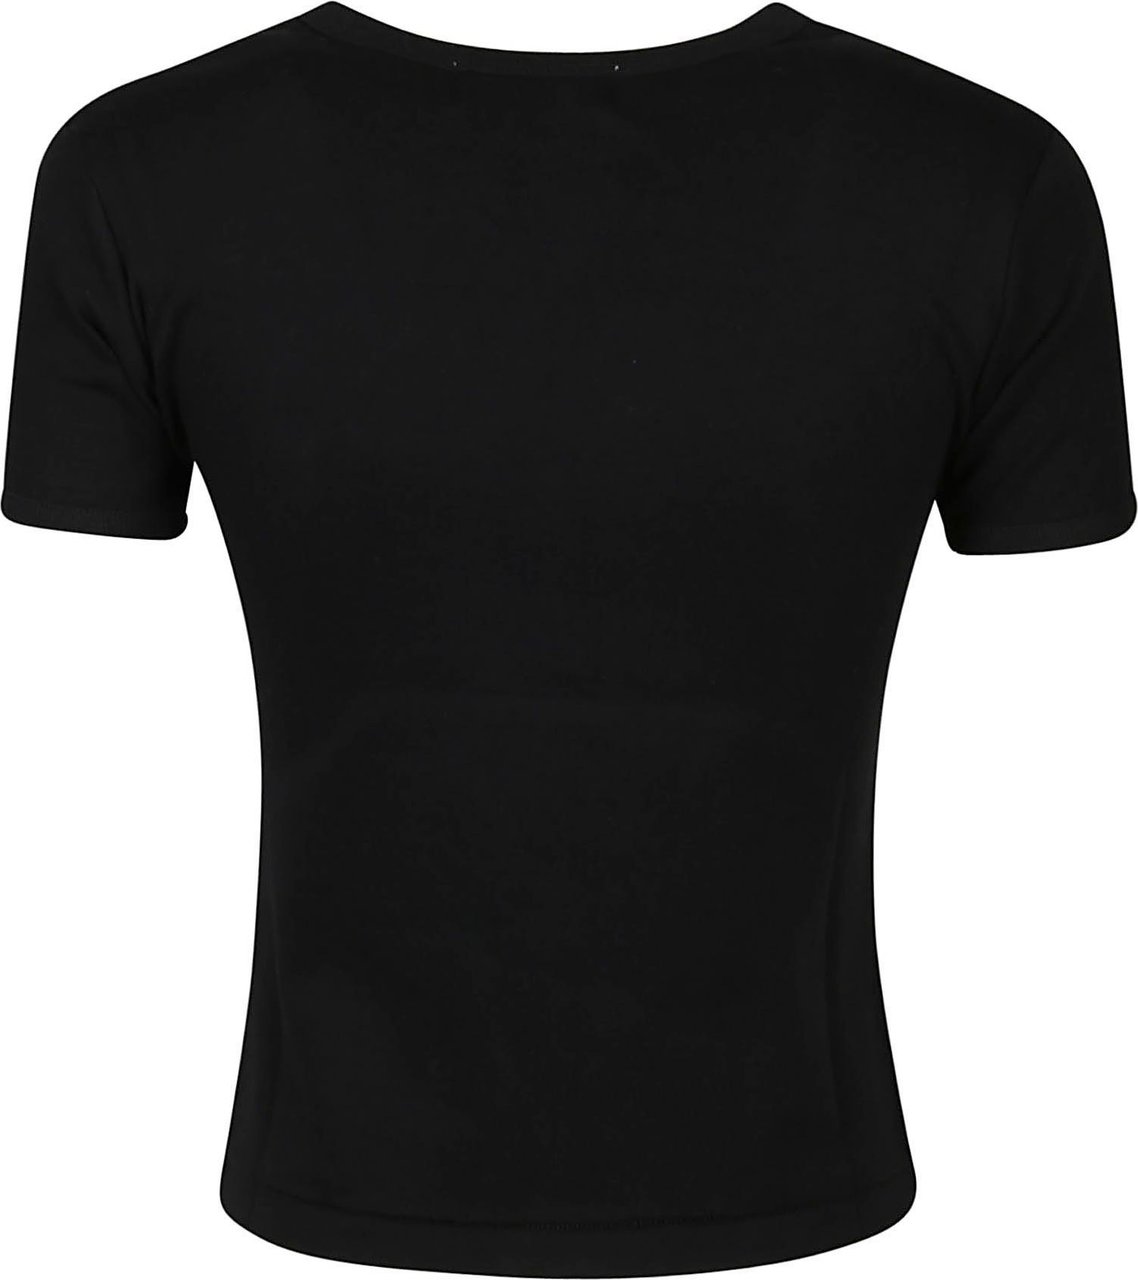 AMBUSH Fitted Graphic T-shirt Black Zwart